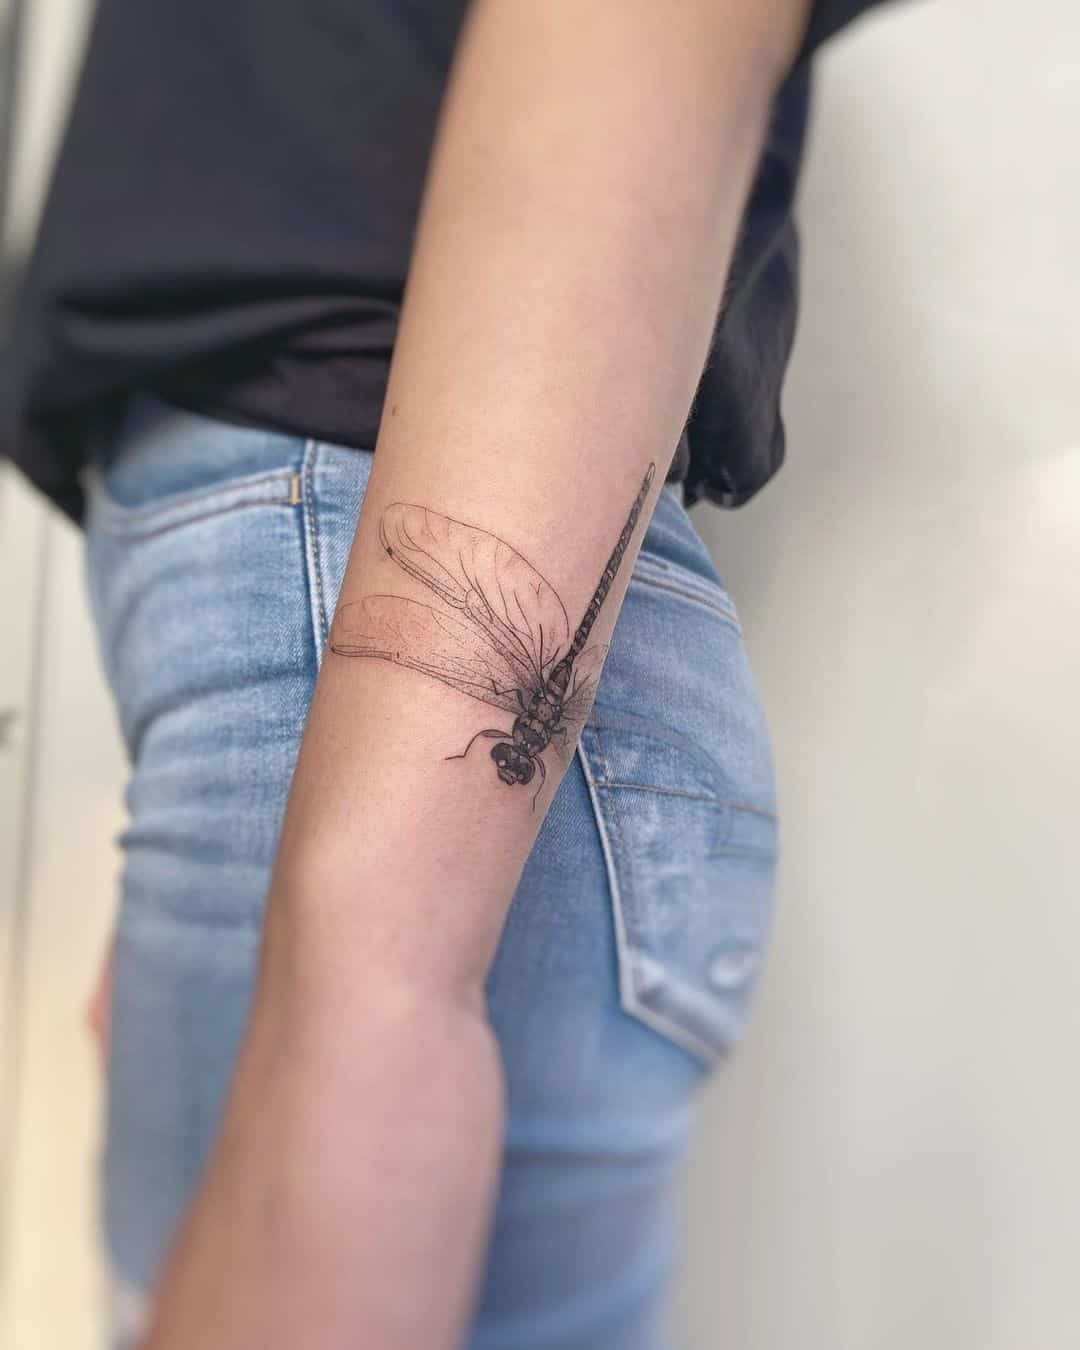 Tatuaje de libélula en la muñeca trasera